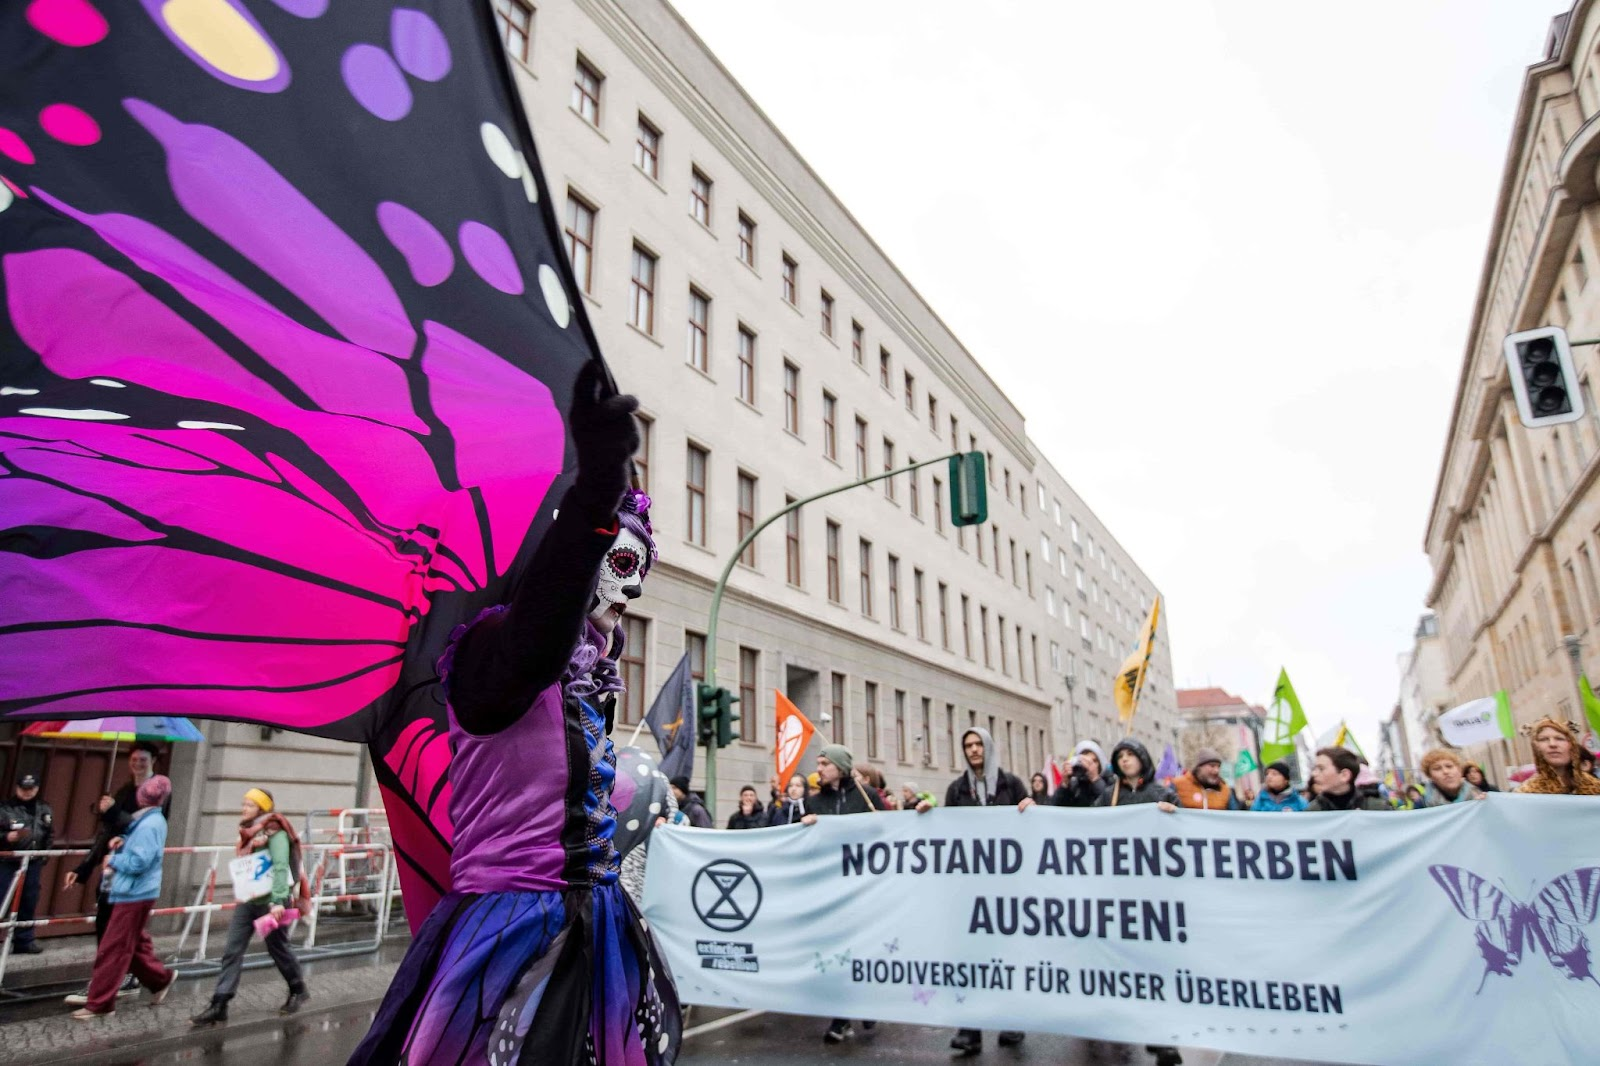 A rebel dressed as a purple butterfly leads a street march